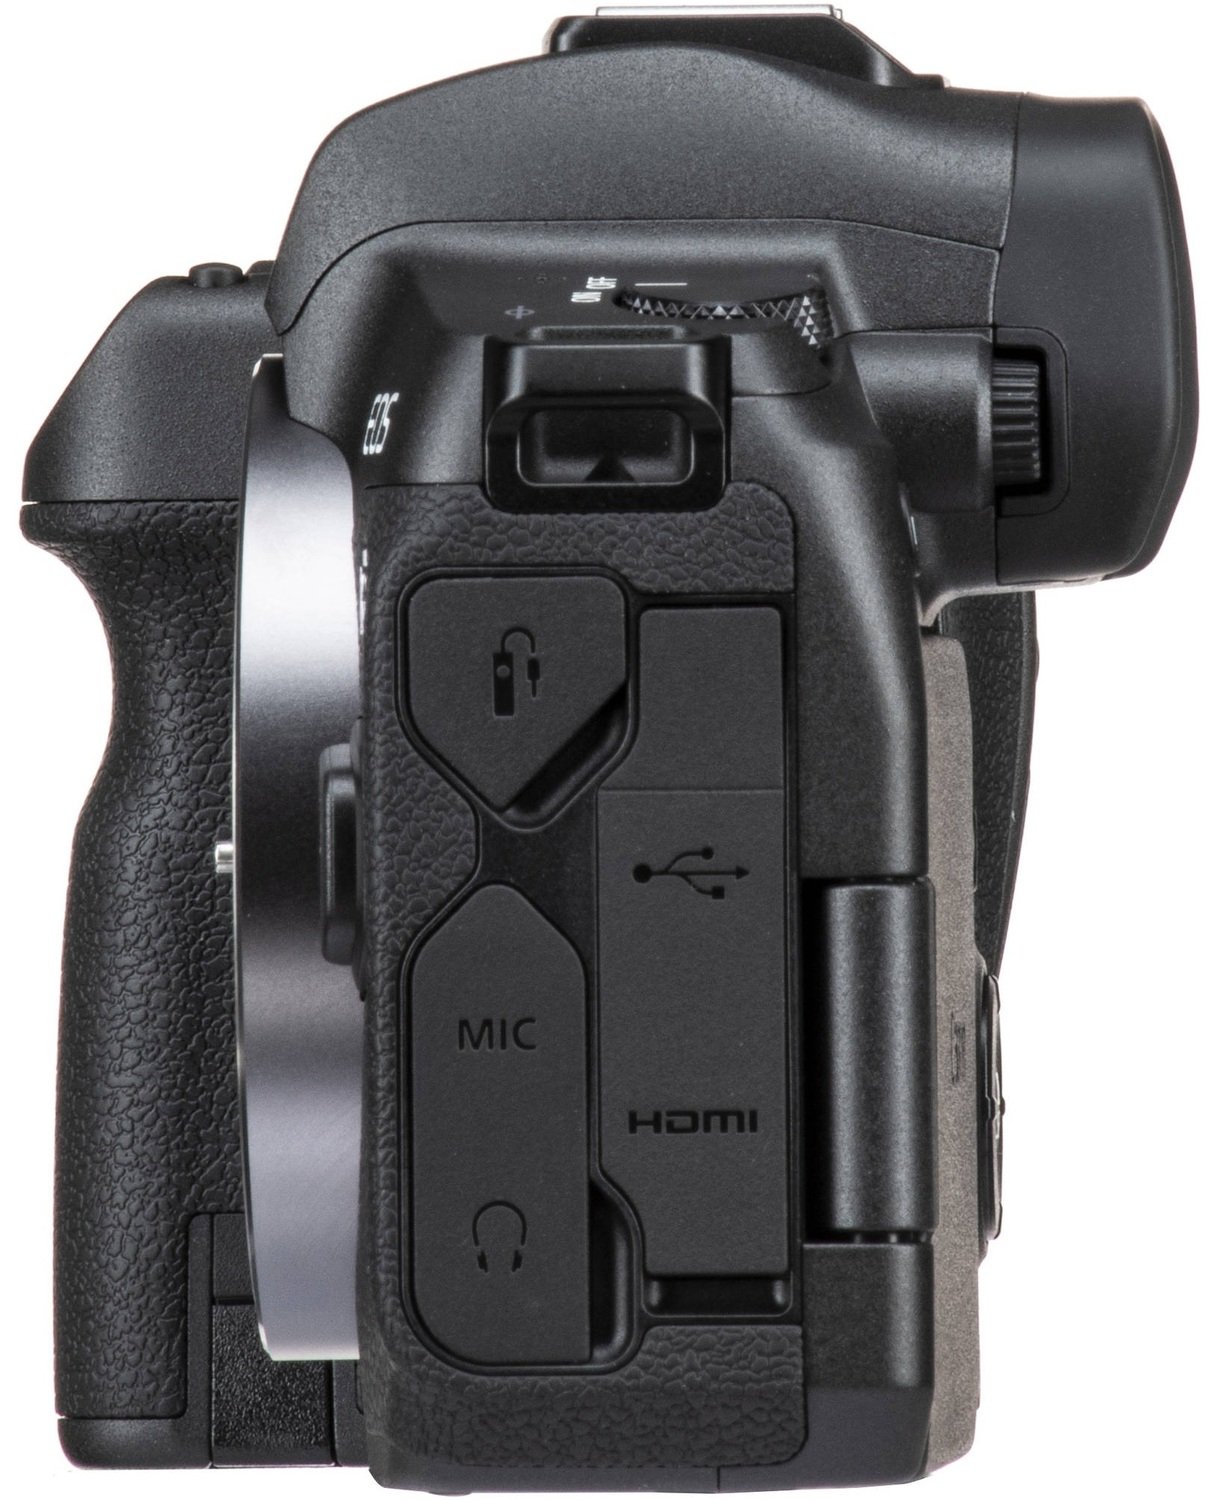 Фотоаппарат CANON EOS R + RF 50mm f/1.8 STM (3075C065RF50) фото 